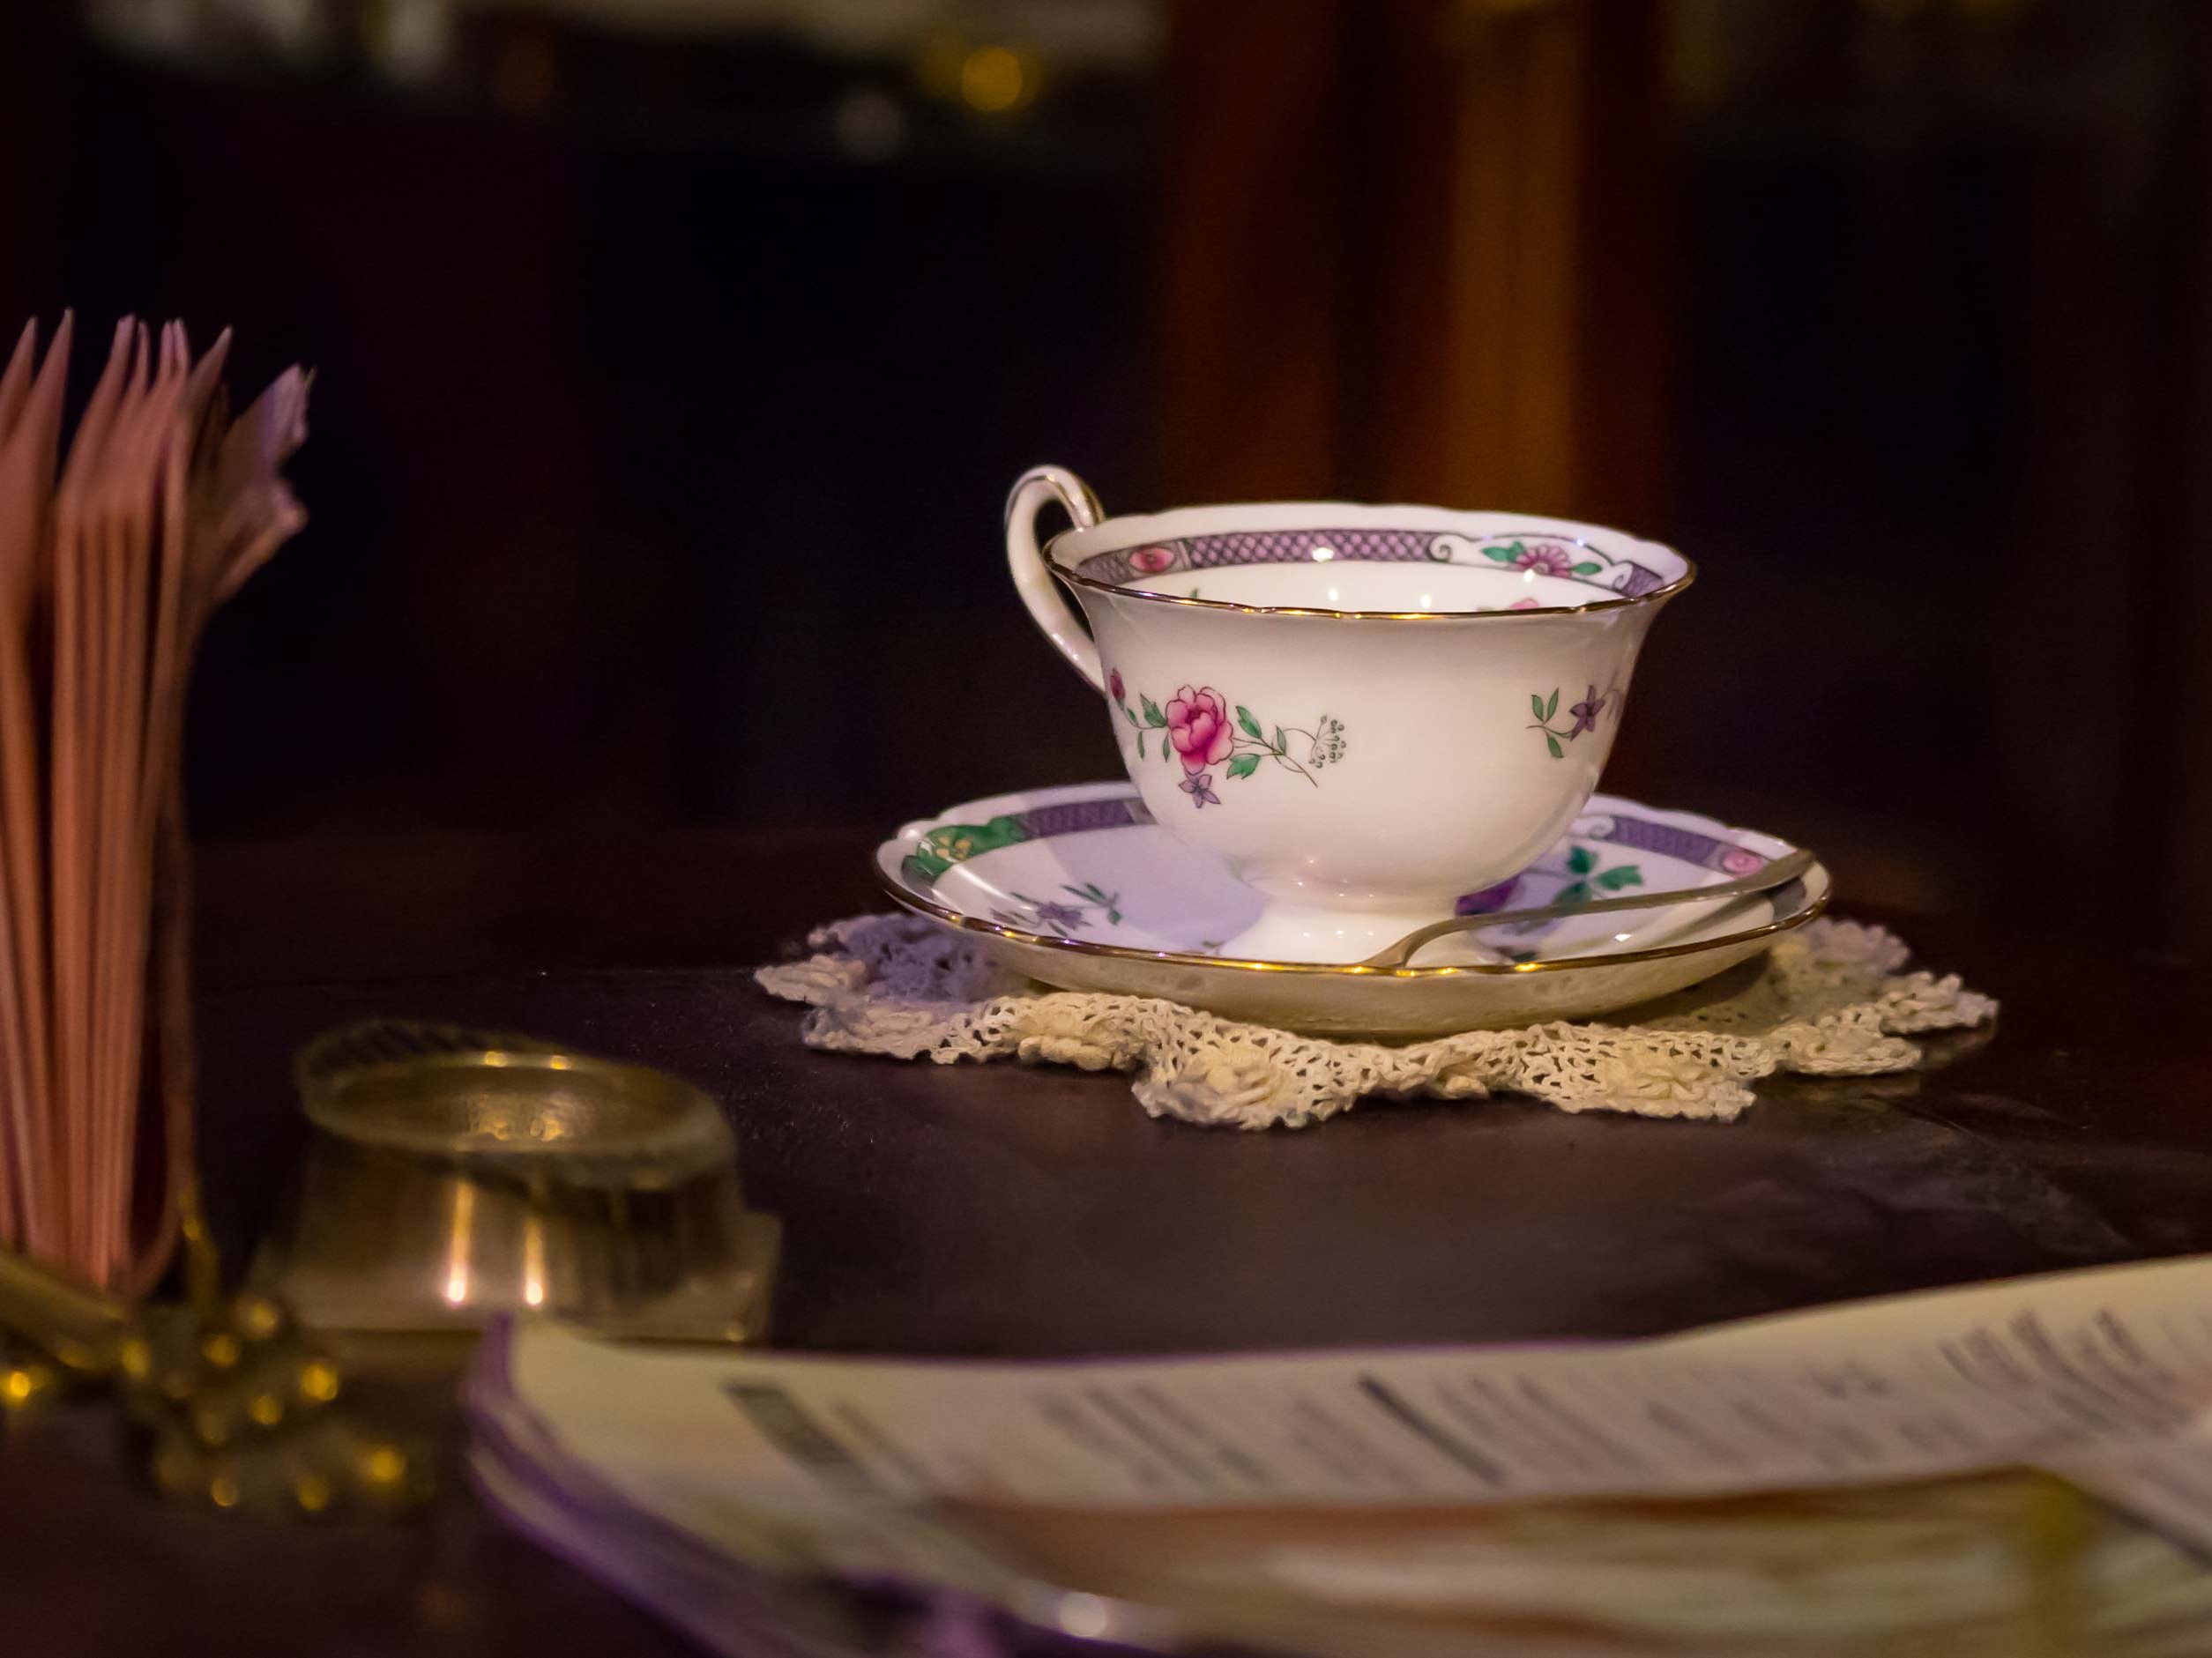 Tea and treats in a magical setting.